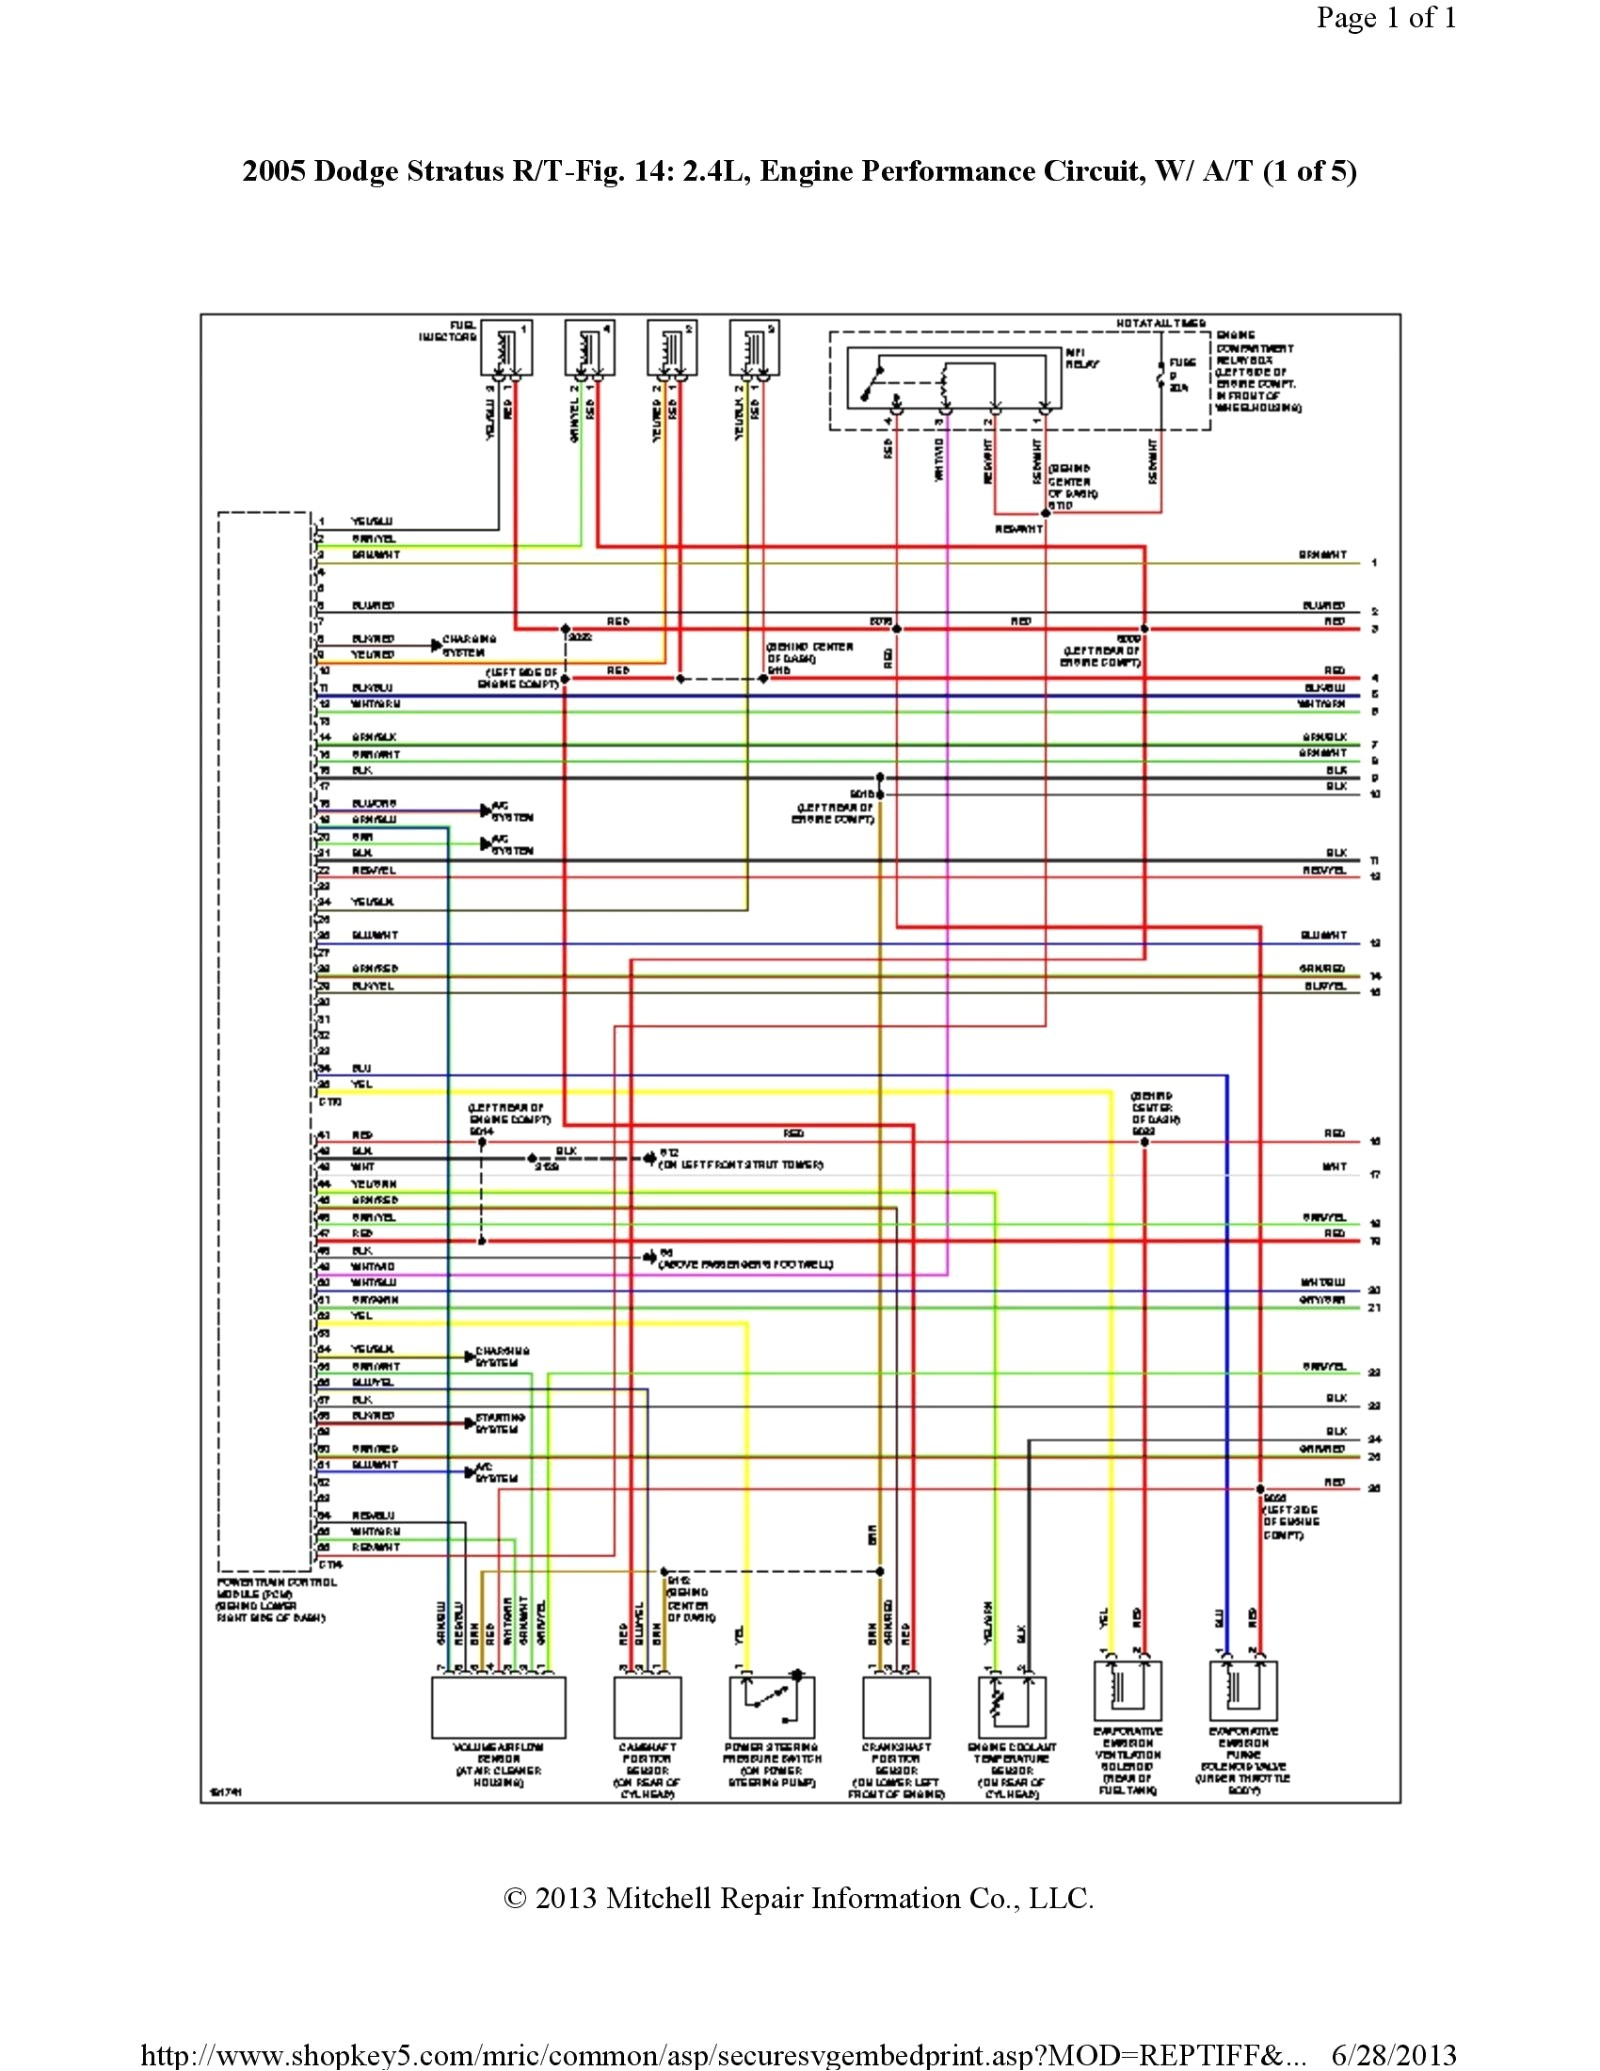 1997 dodge stratus wiring diagram wiring diagram preview 95 stratus wiring diagram